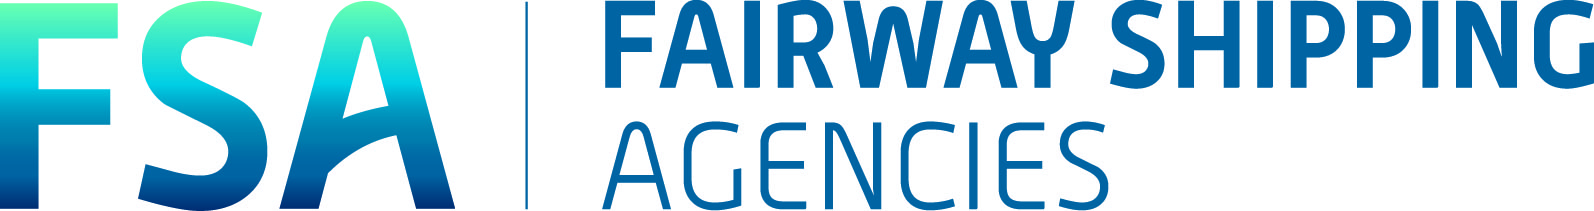 fairway_1_logo